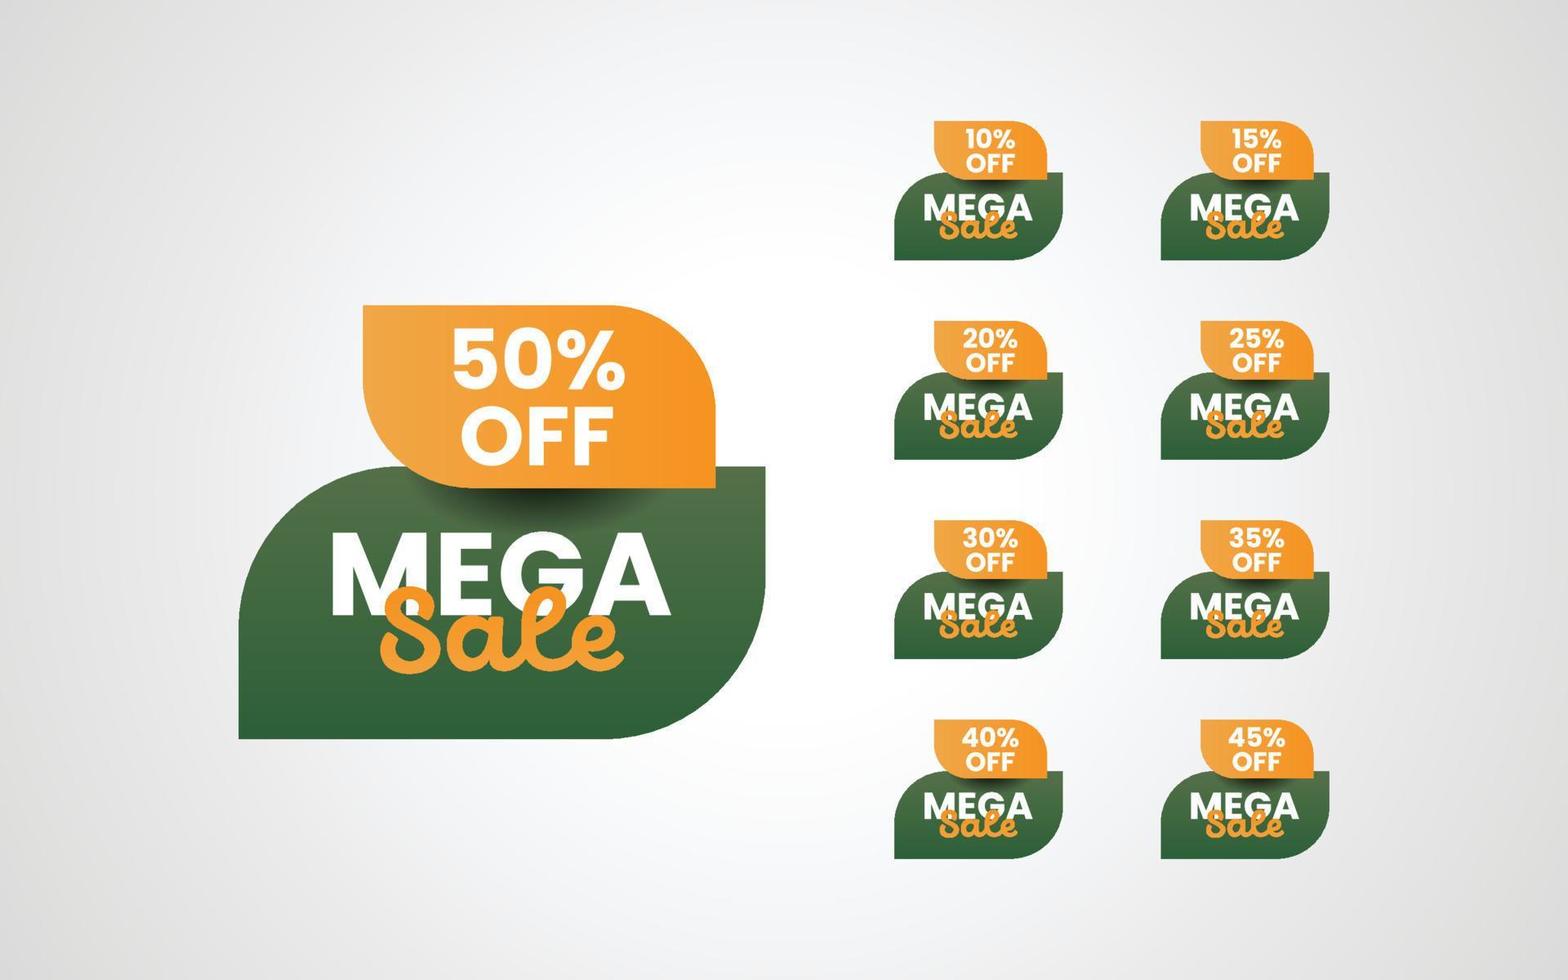 Set mega sale discount tag label special offer 10 to 50 percent illustration template design vector